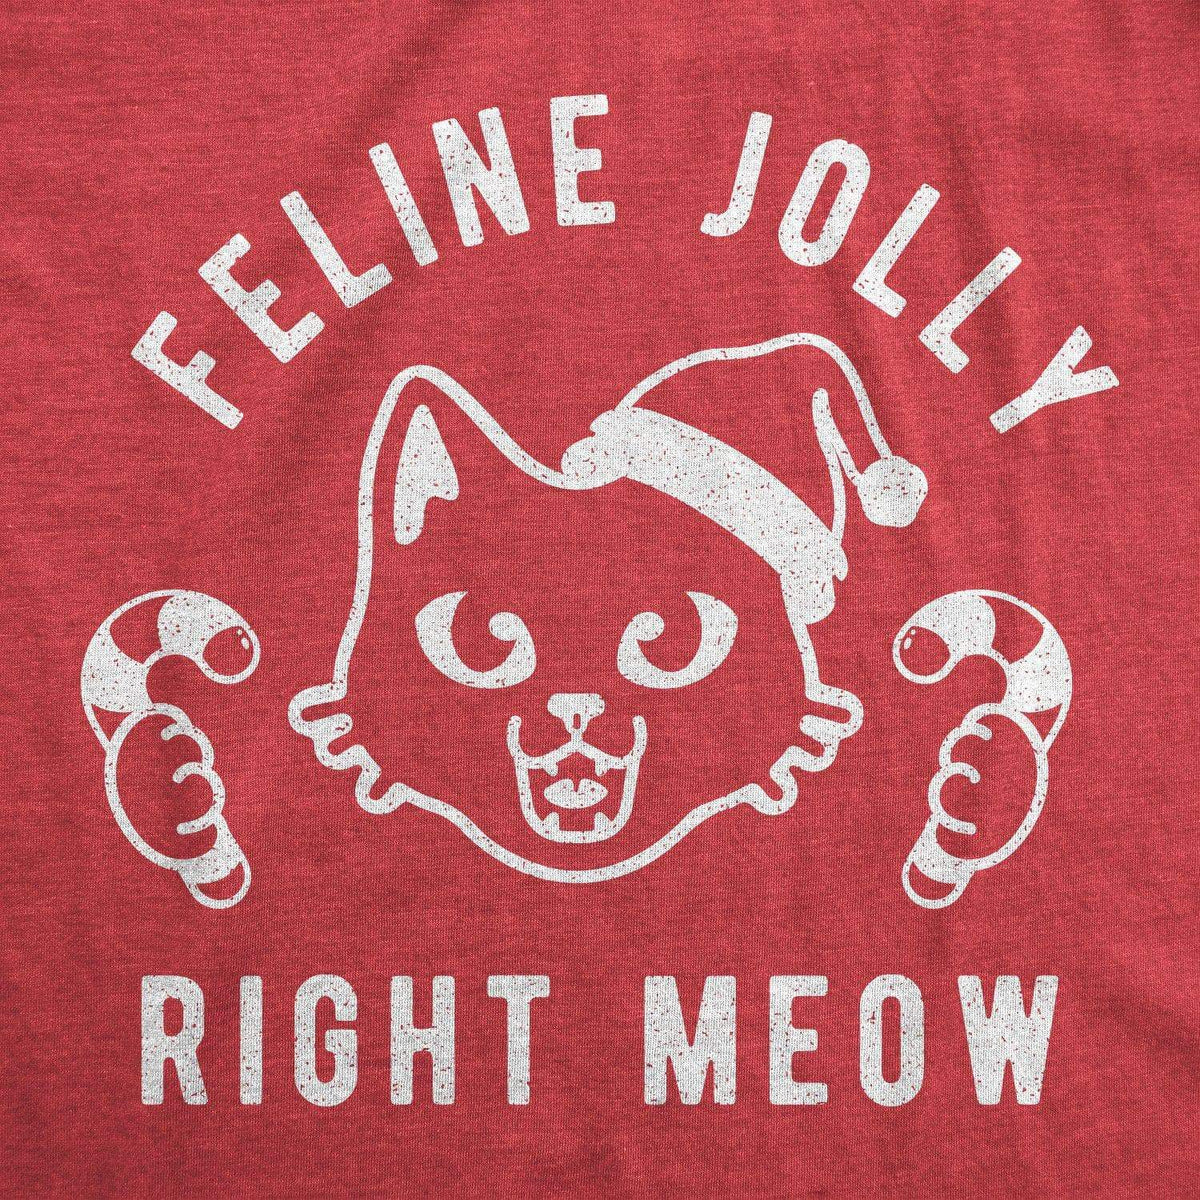 Feline Jolly Right Now Women&#39;s Tshirt - Crazy Dog T-Shirts